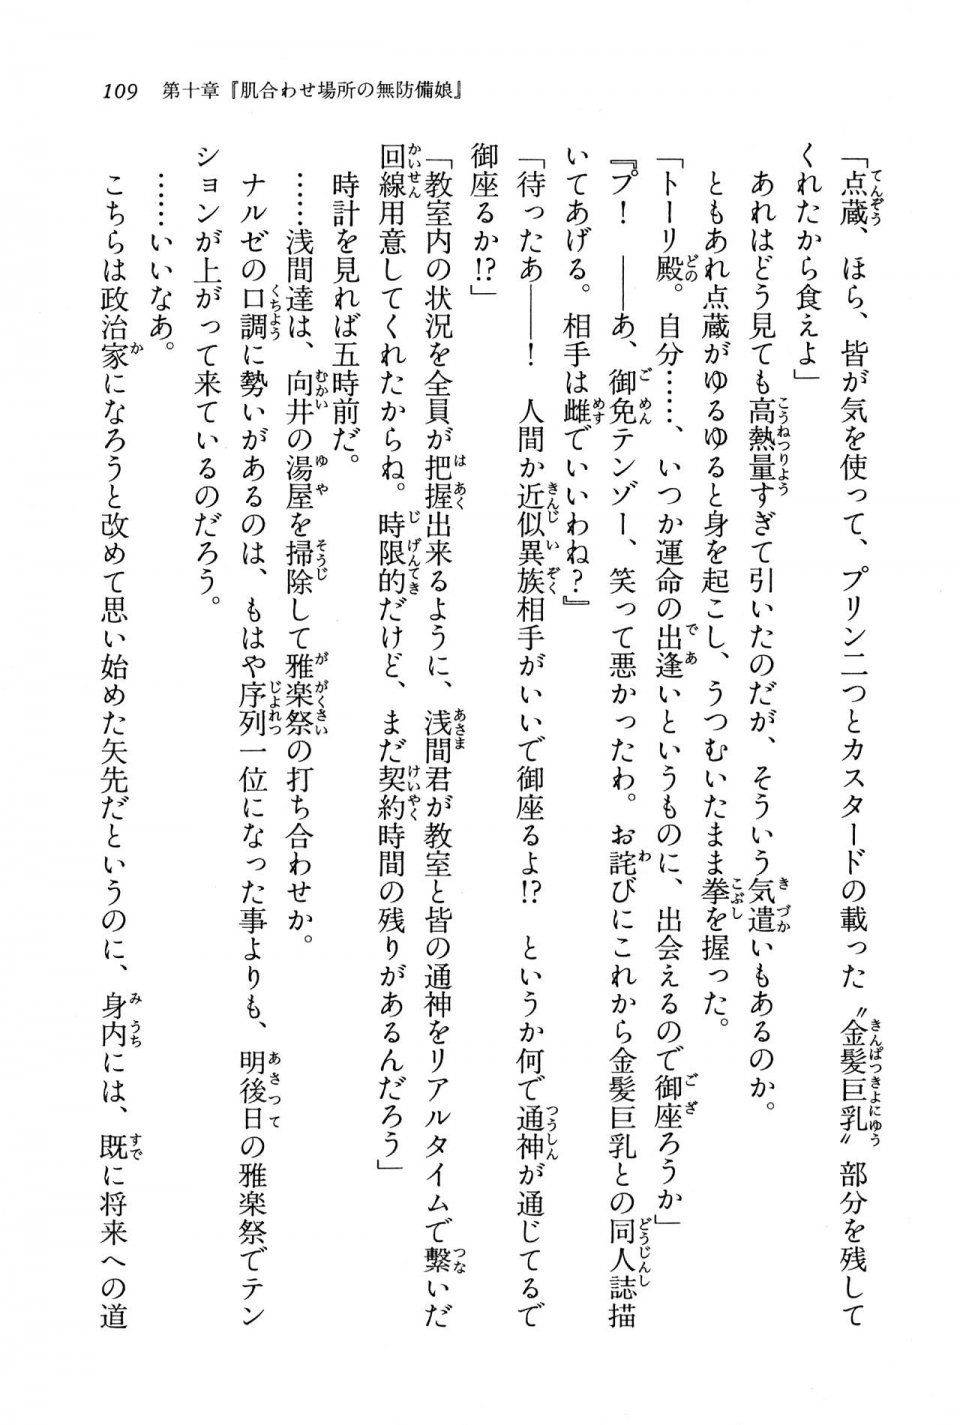 Kyoukai Senjou no Horizon BD Special Mininovel Vol 8(4B) - Photo #113